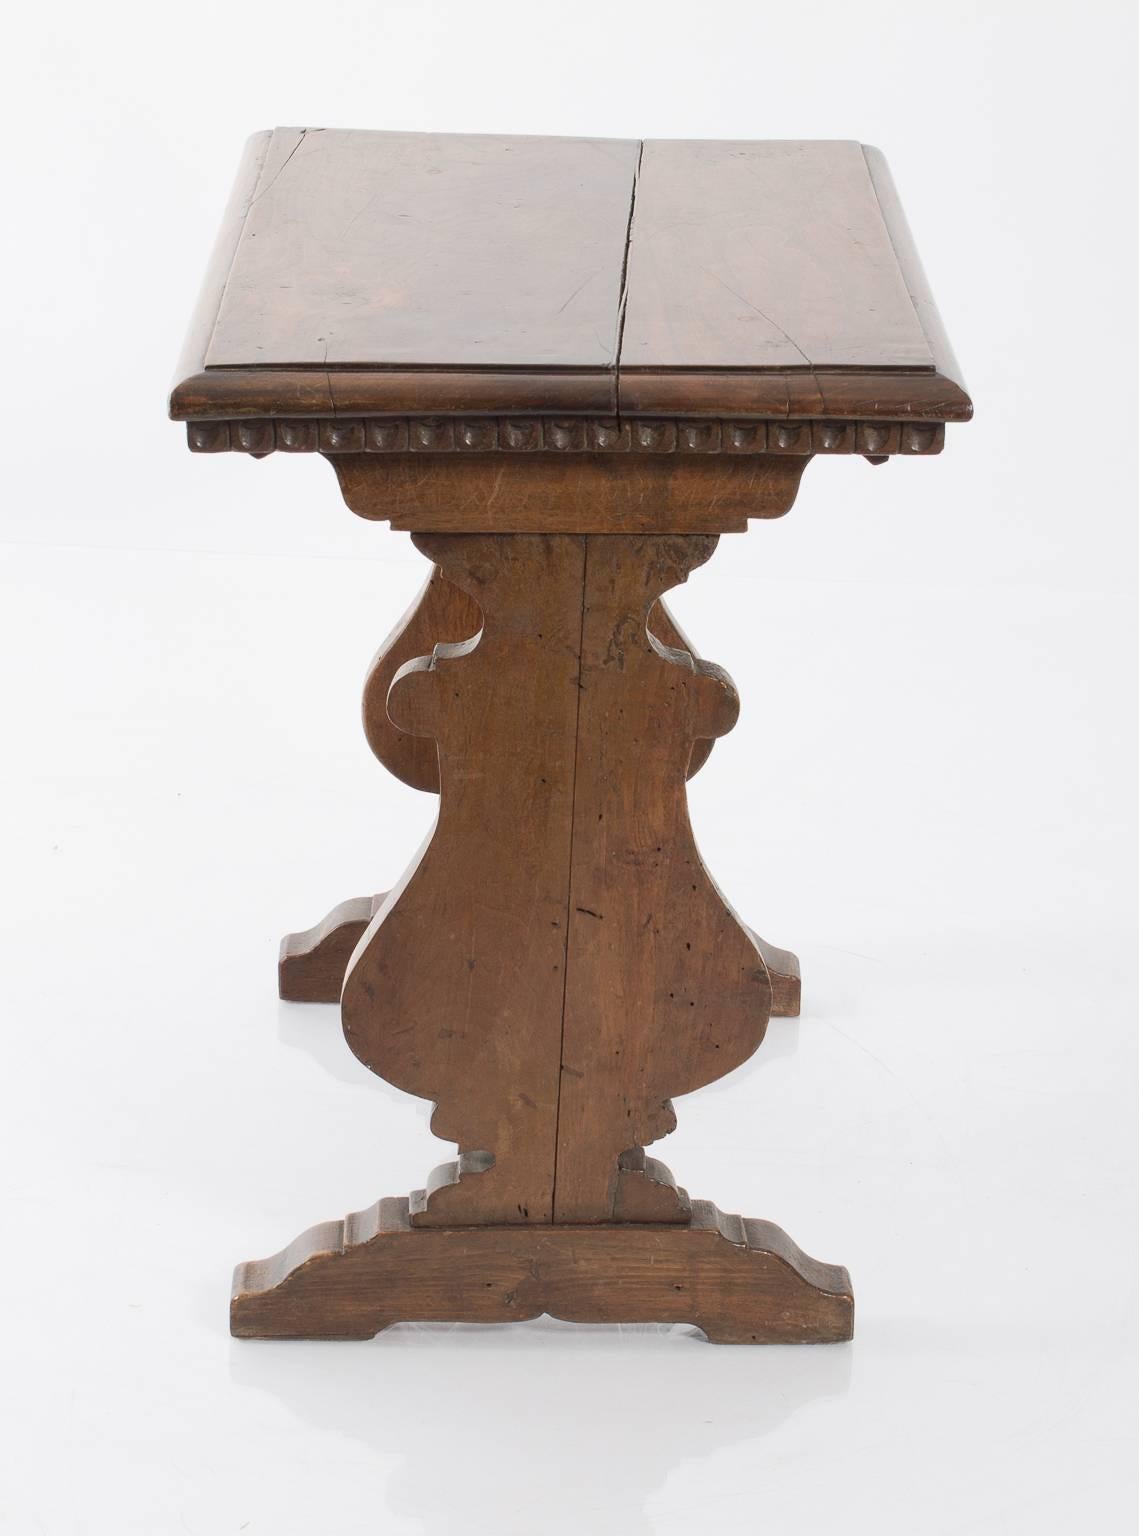 19th century Italian walnut side table with decorative stretcher.